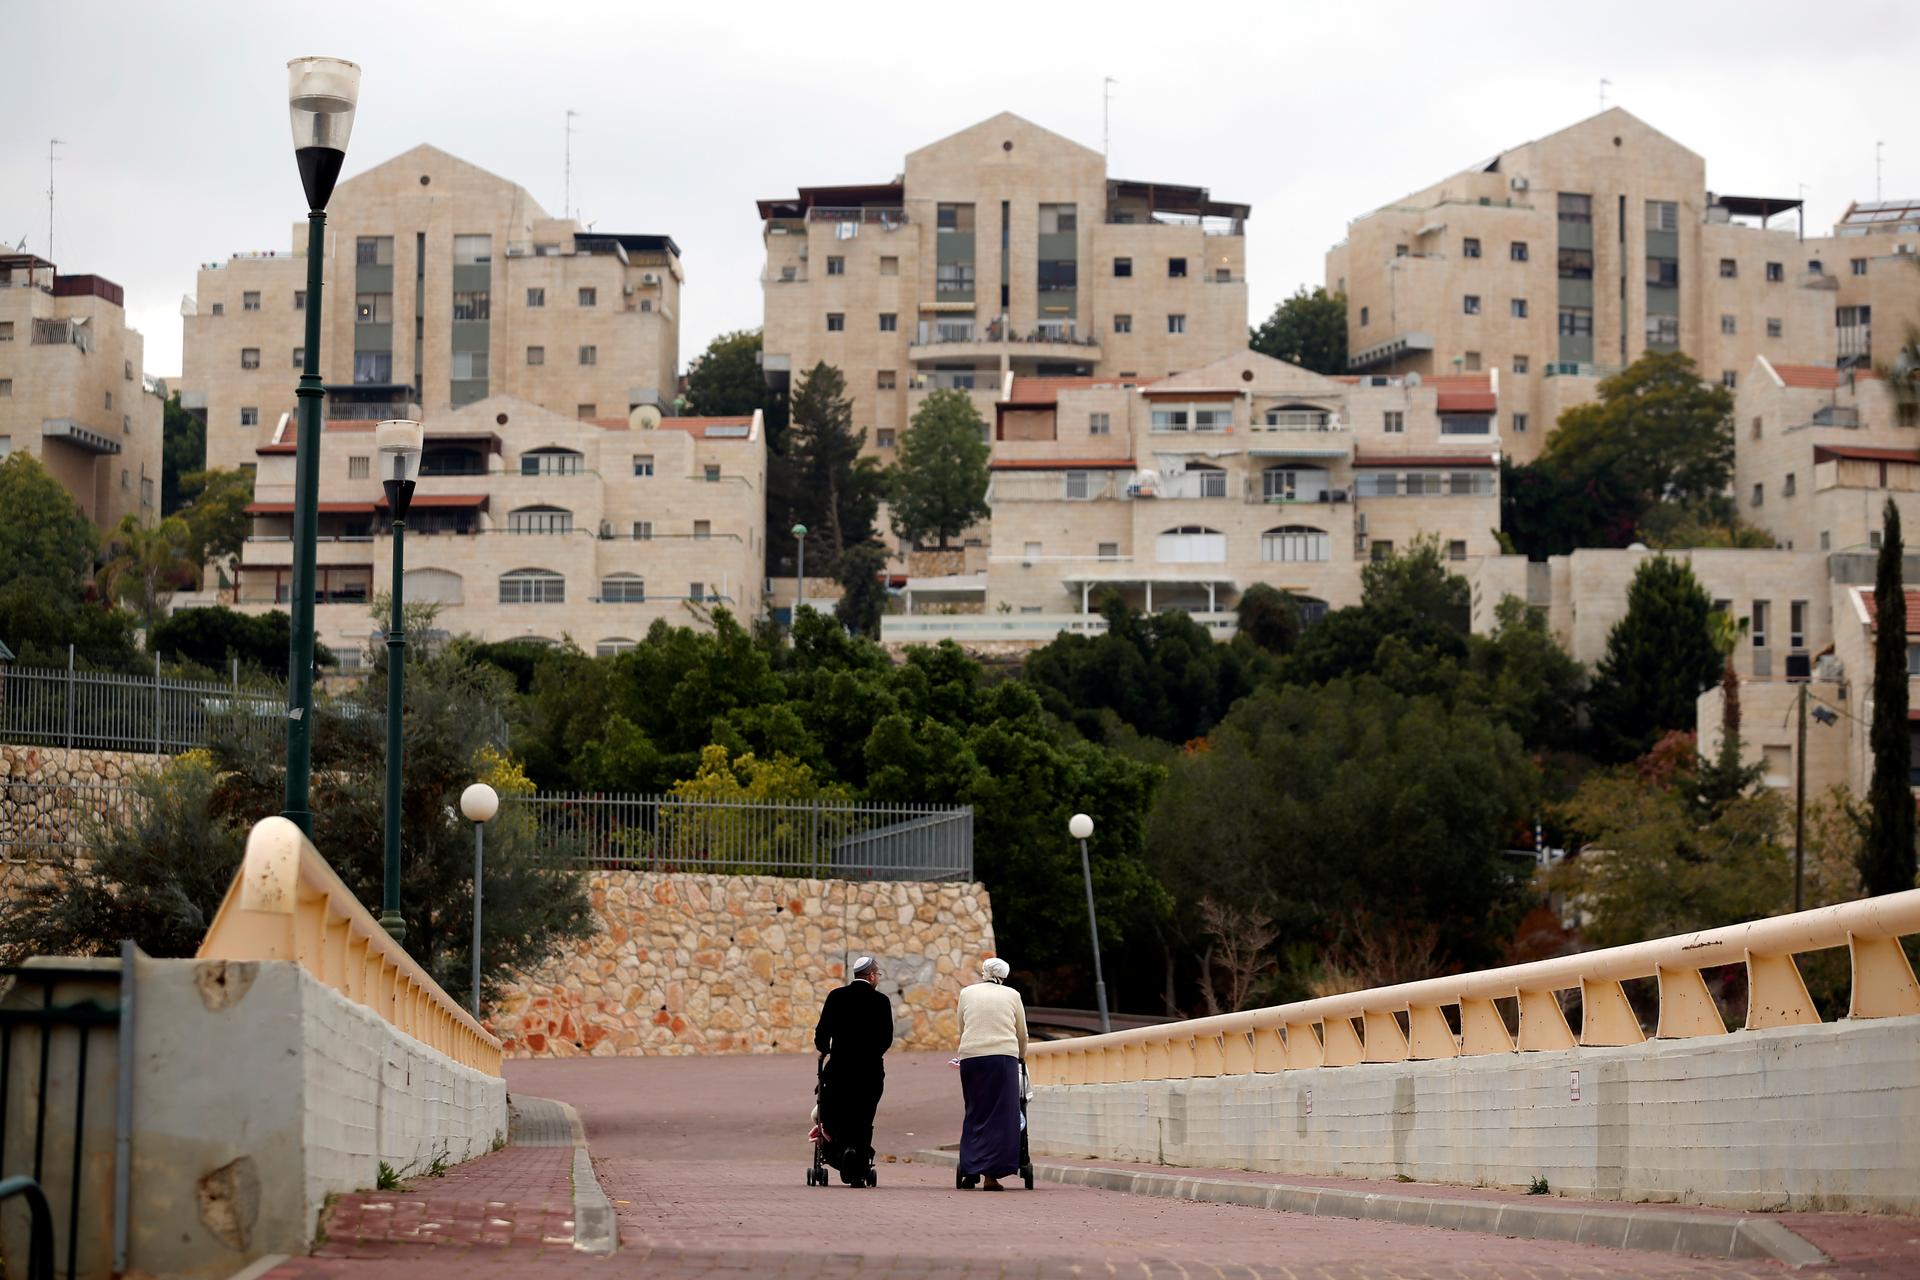 Israel settlement